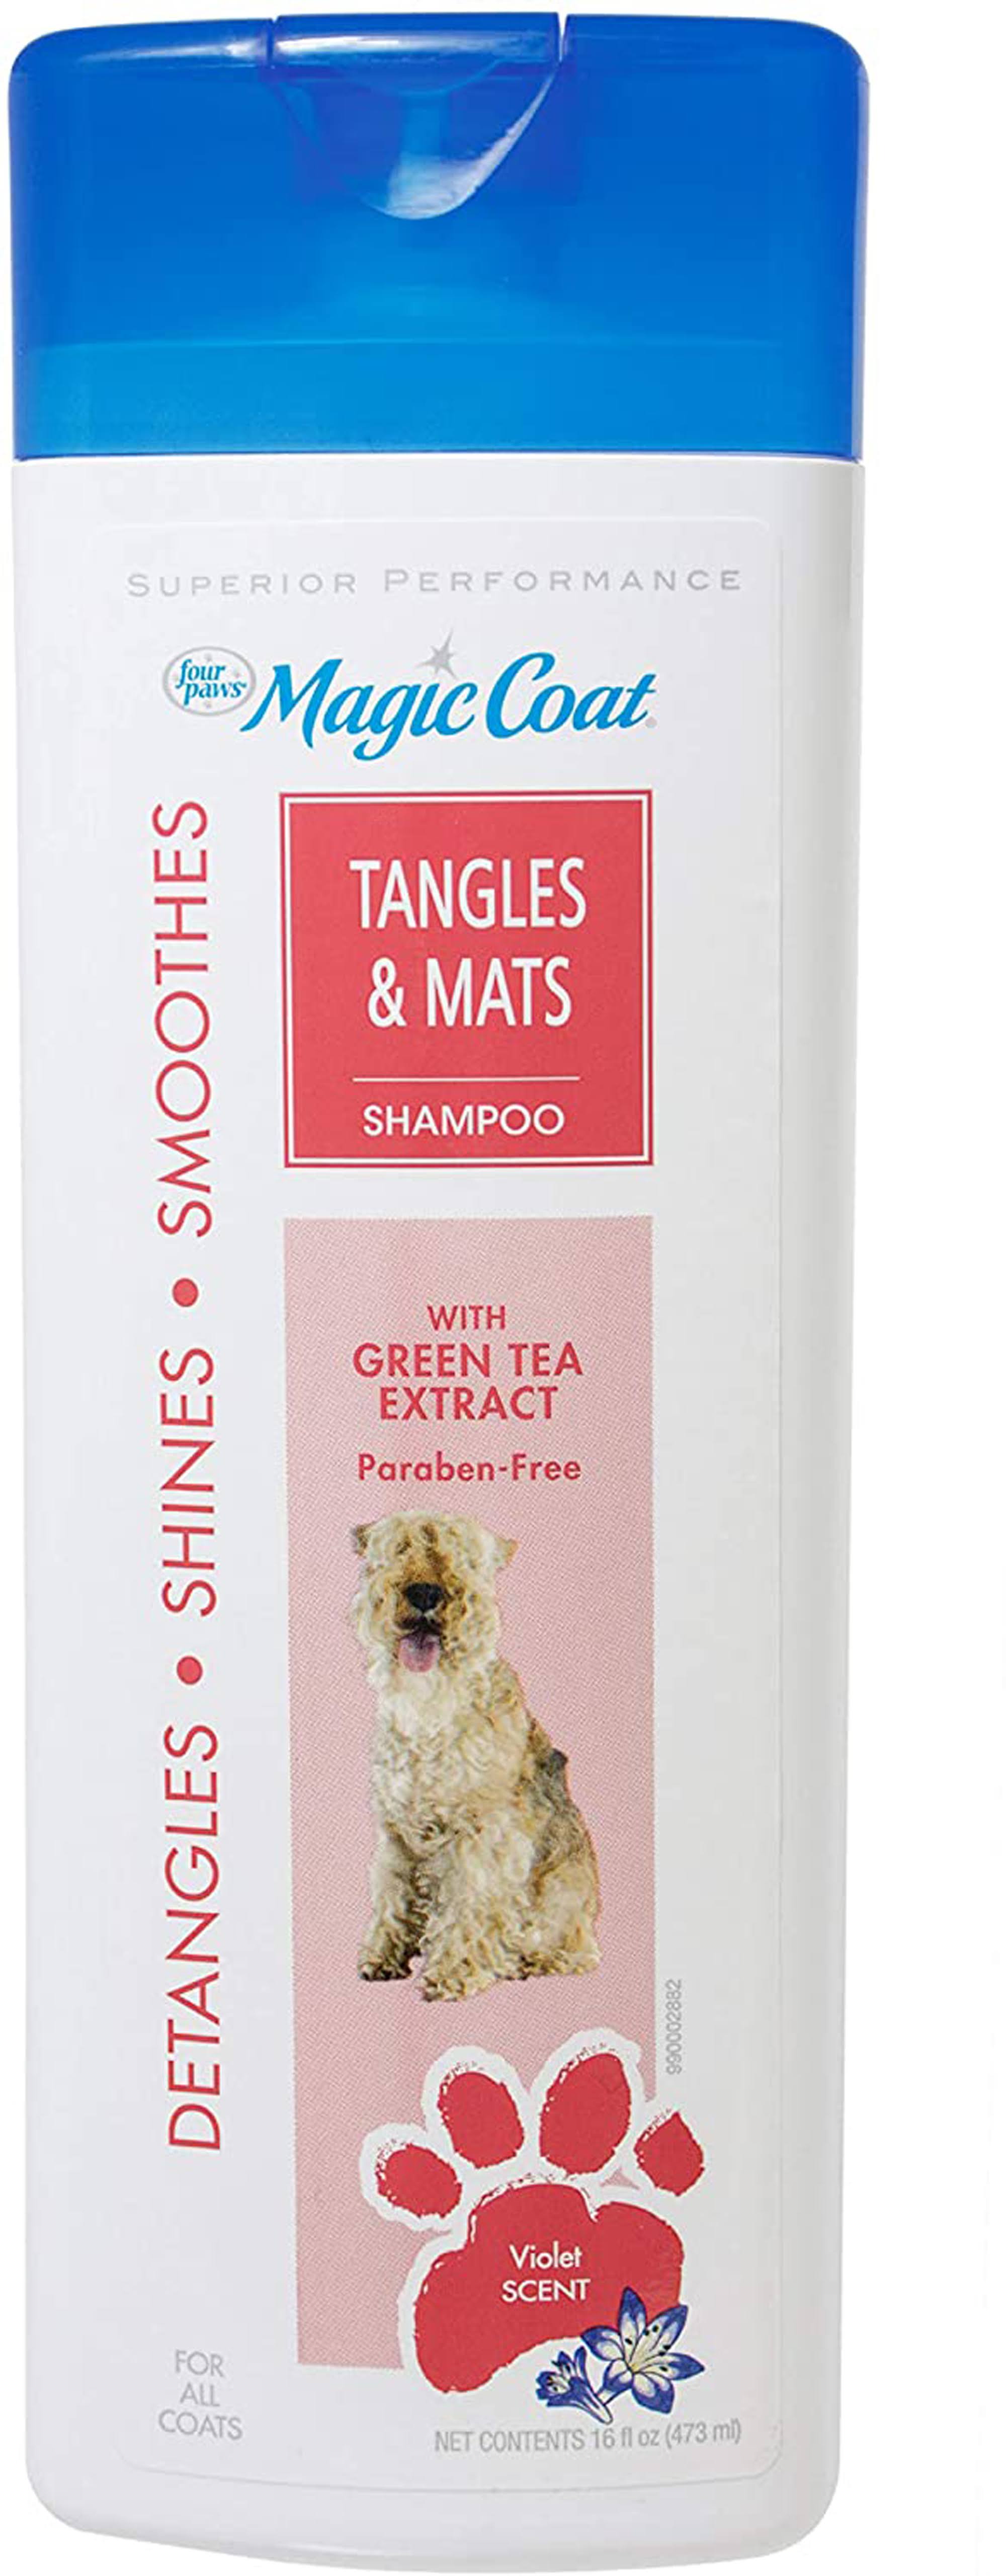 Four Paws Magic Coat Dog Grooming Shampoo - Tangles and Mats, 16oz